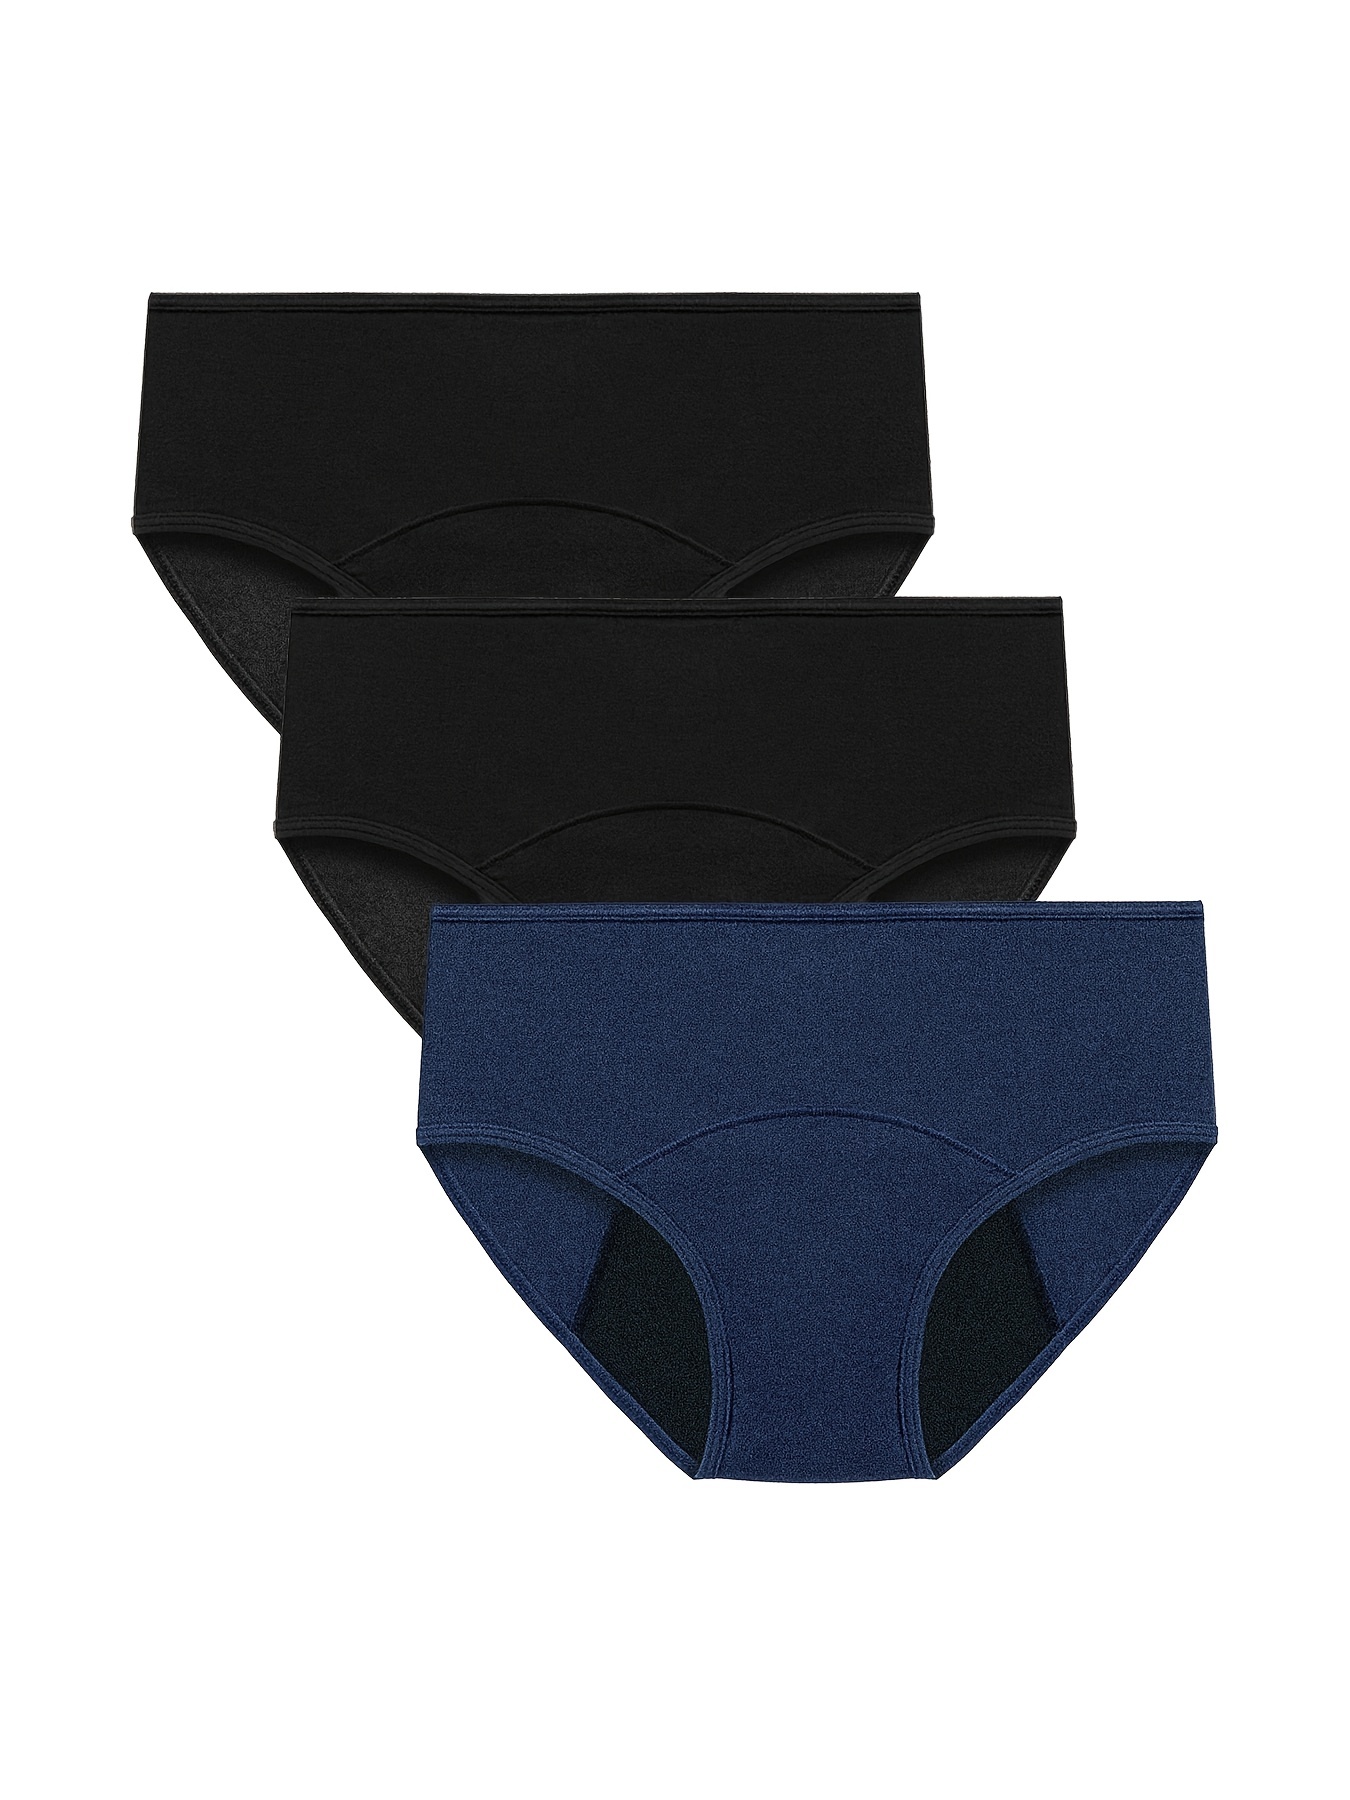 Underwear For Women Plus Size Menstrual Pocket Pocket High Waist Anti  Leakage Pants Panties,6 Pack 